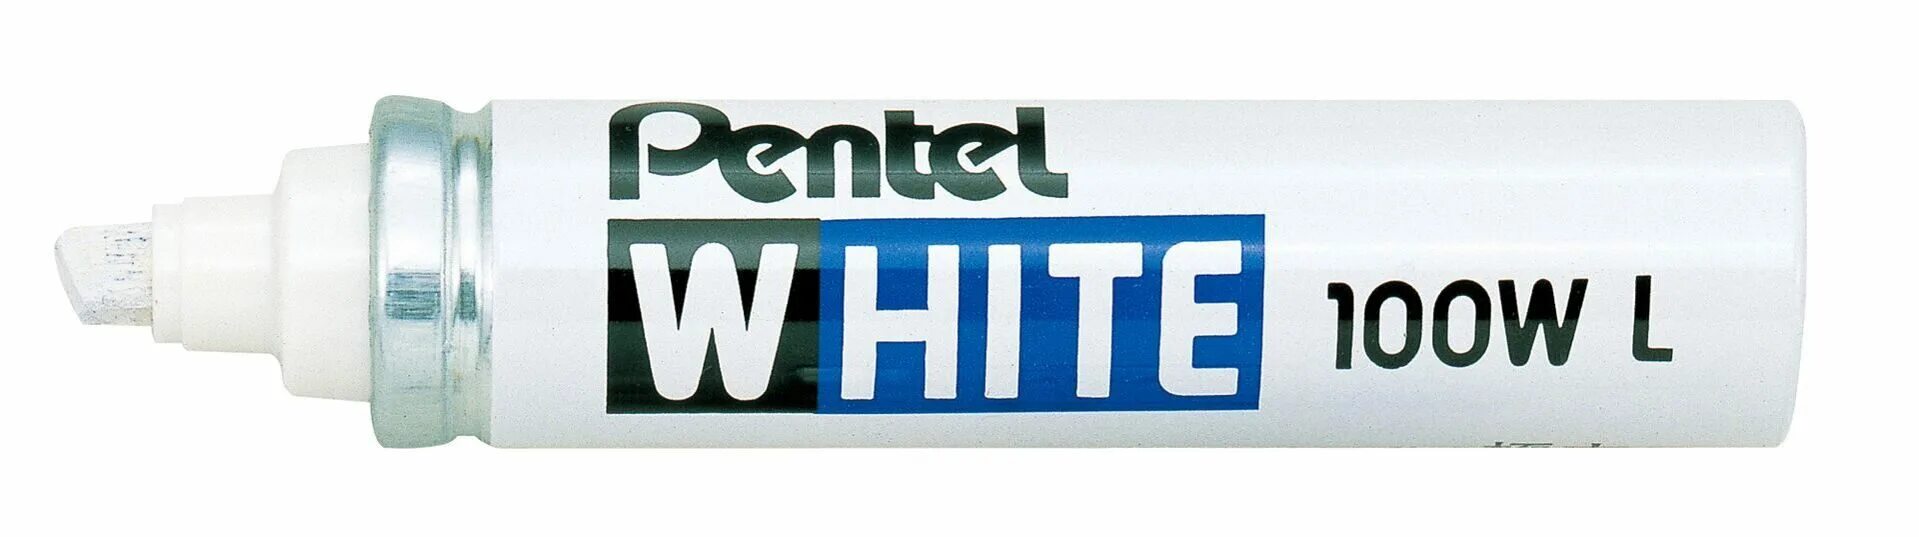 Маркер Pentel White 100w белый. Маркер Pentel x100w. Маркер Pentel x100w белый перманентный. Маркер промышленный Pentel White р-266.